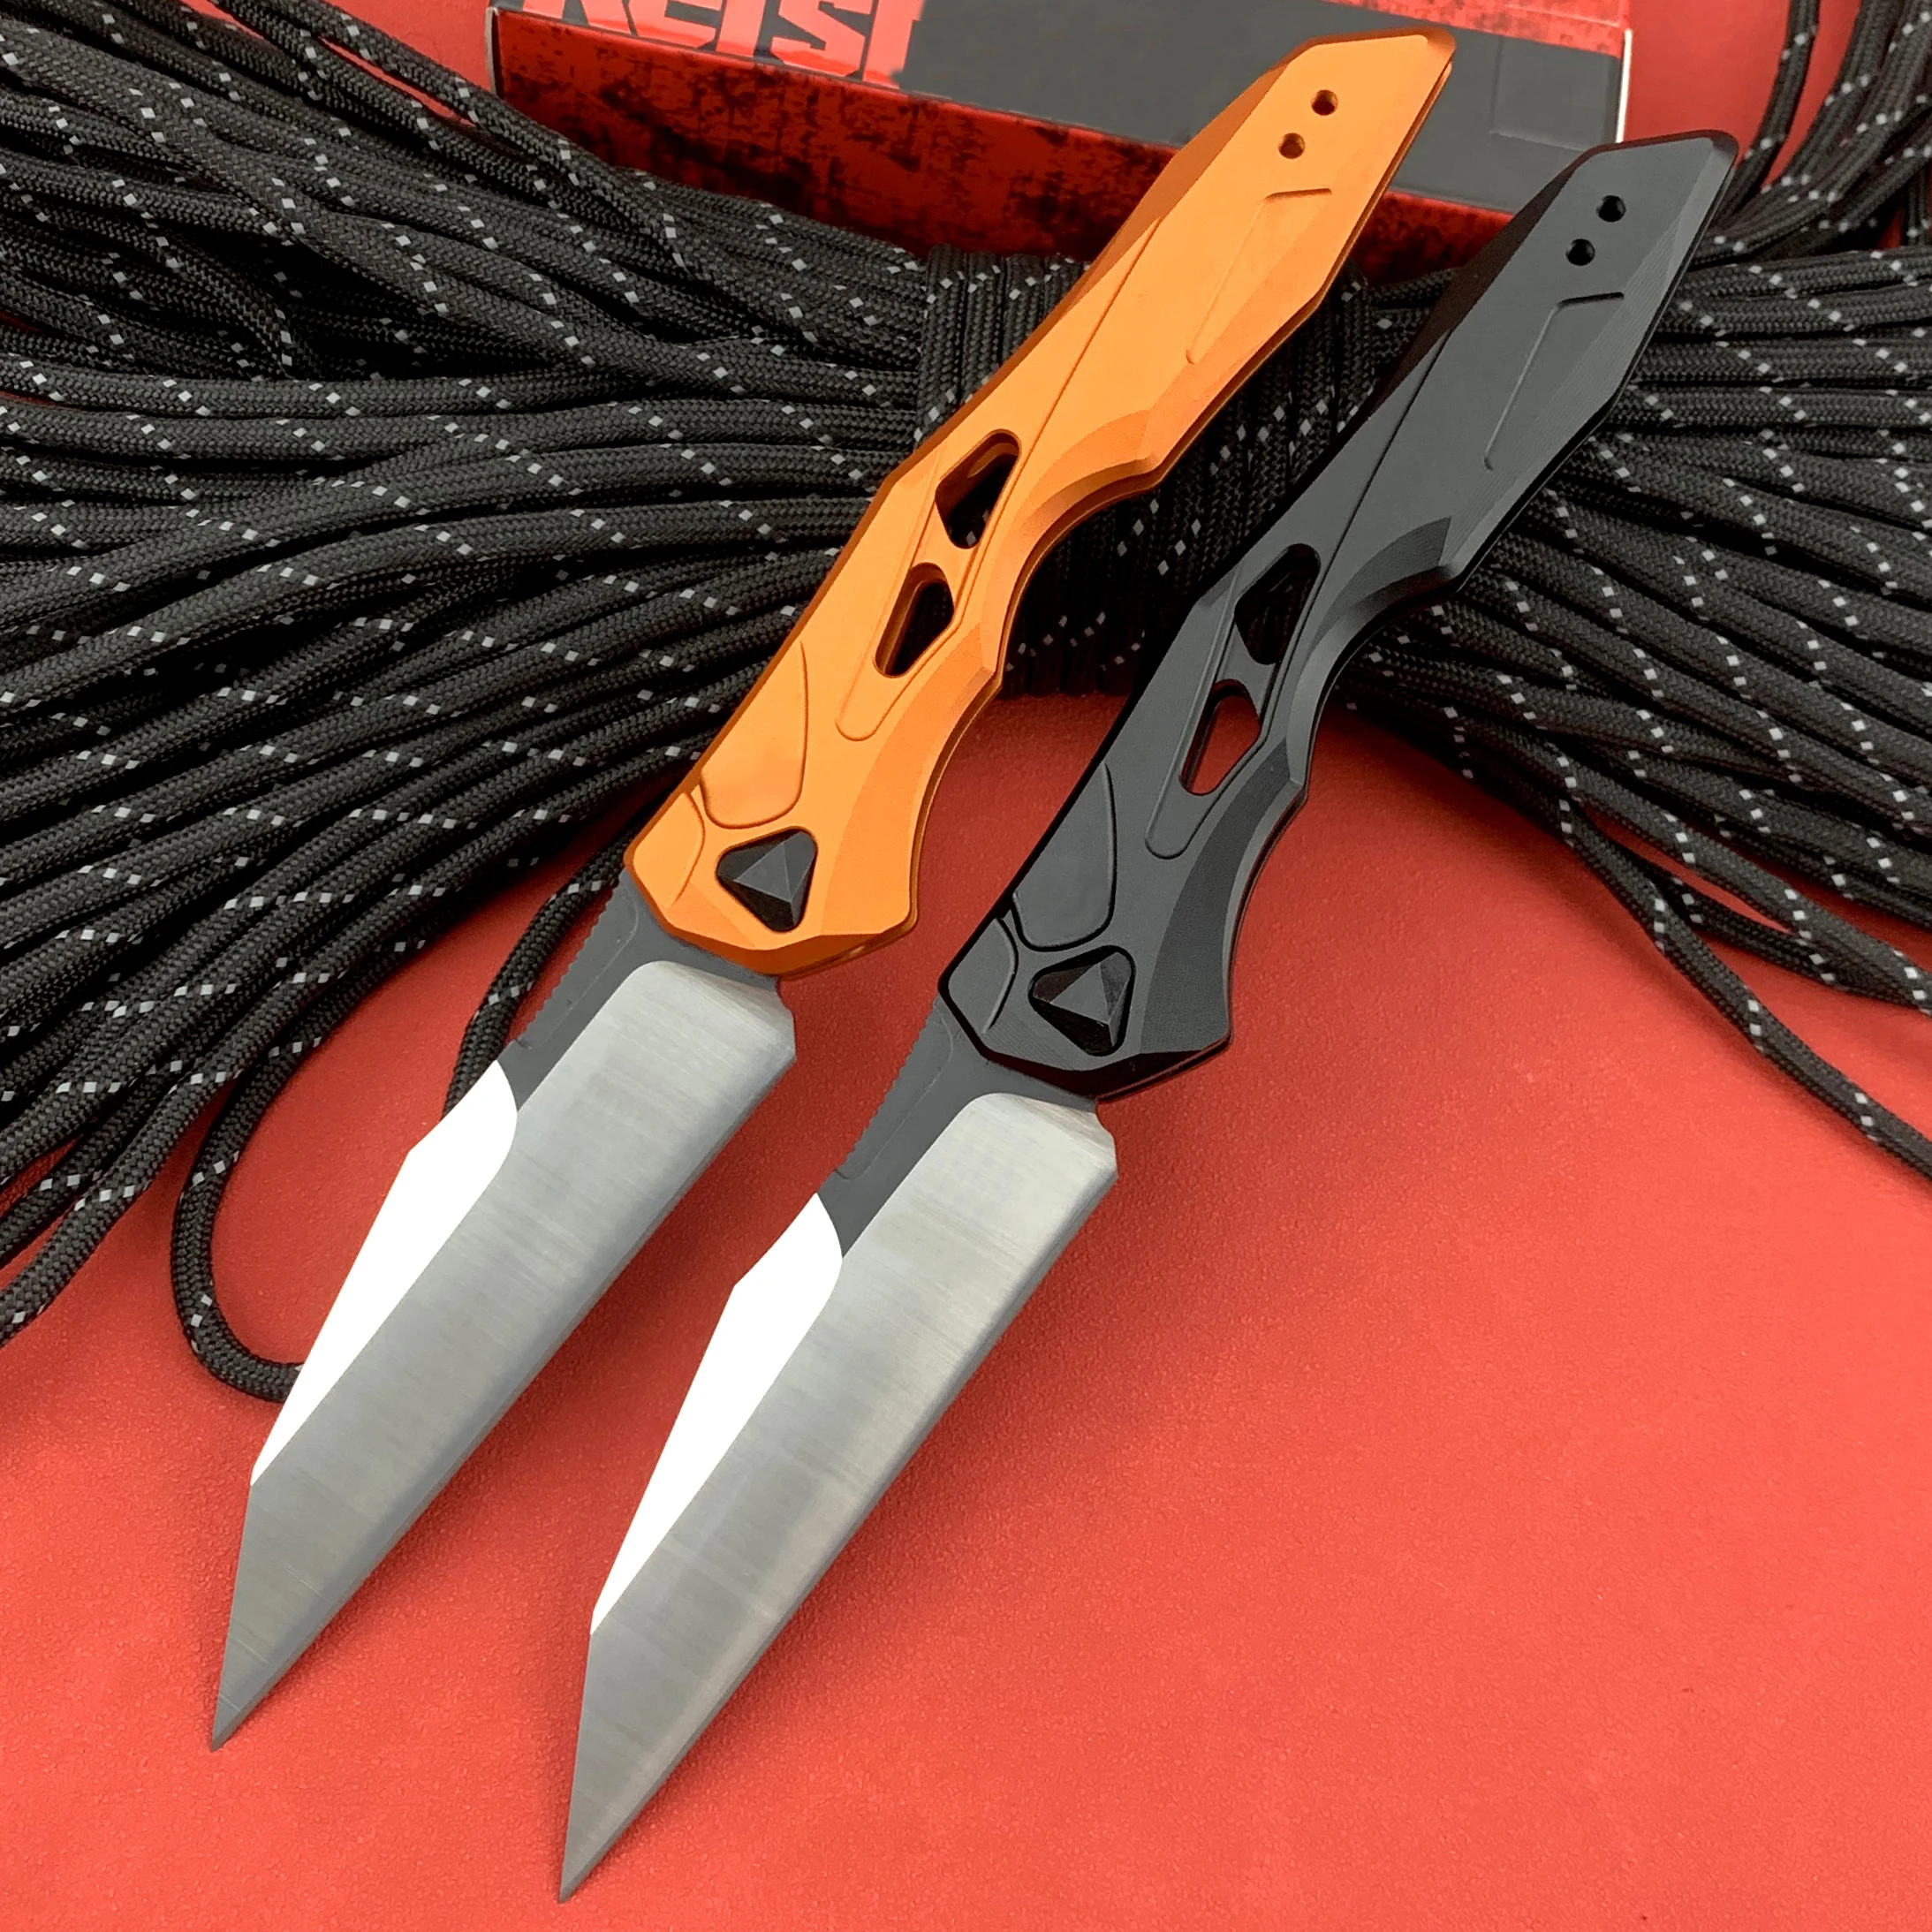 

KS 7650 Folding Knife Tactical Survival CPM-154 Blade EDC Pocket Knife Outdoor Self Defense Camping Knives Aluminum Tool Sale